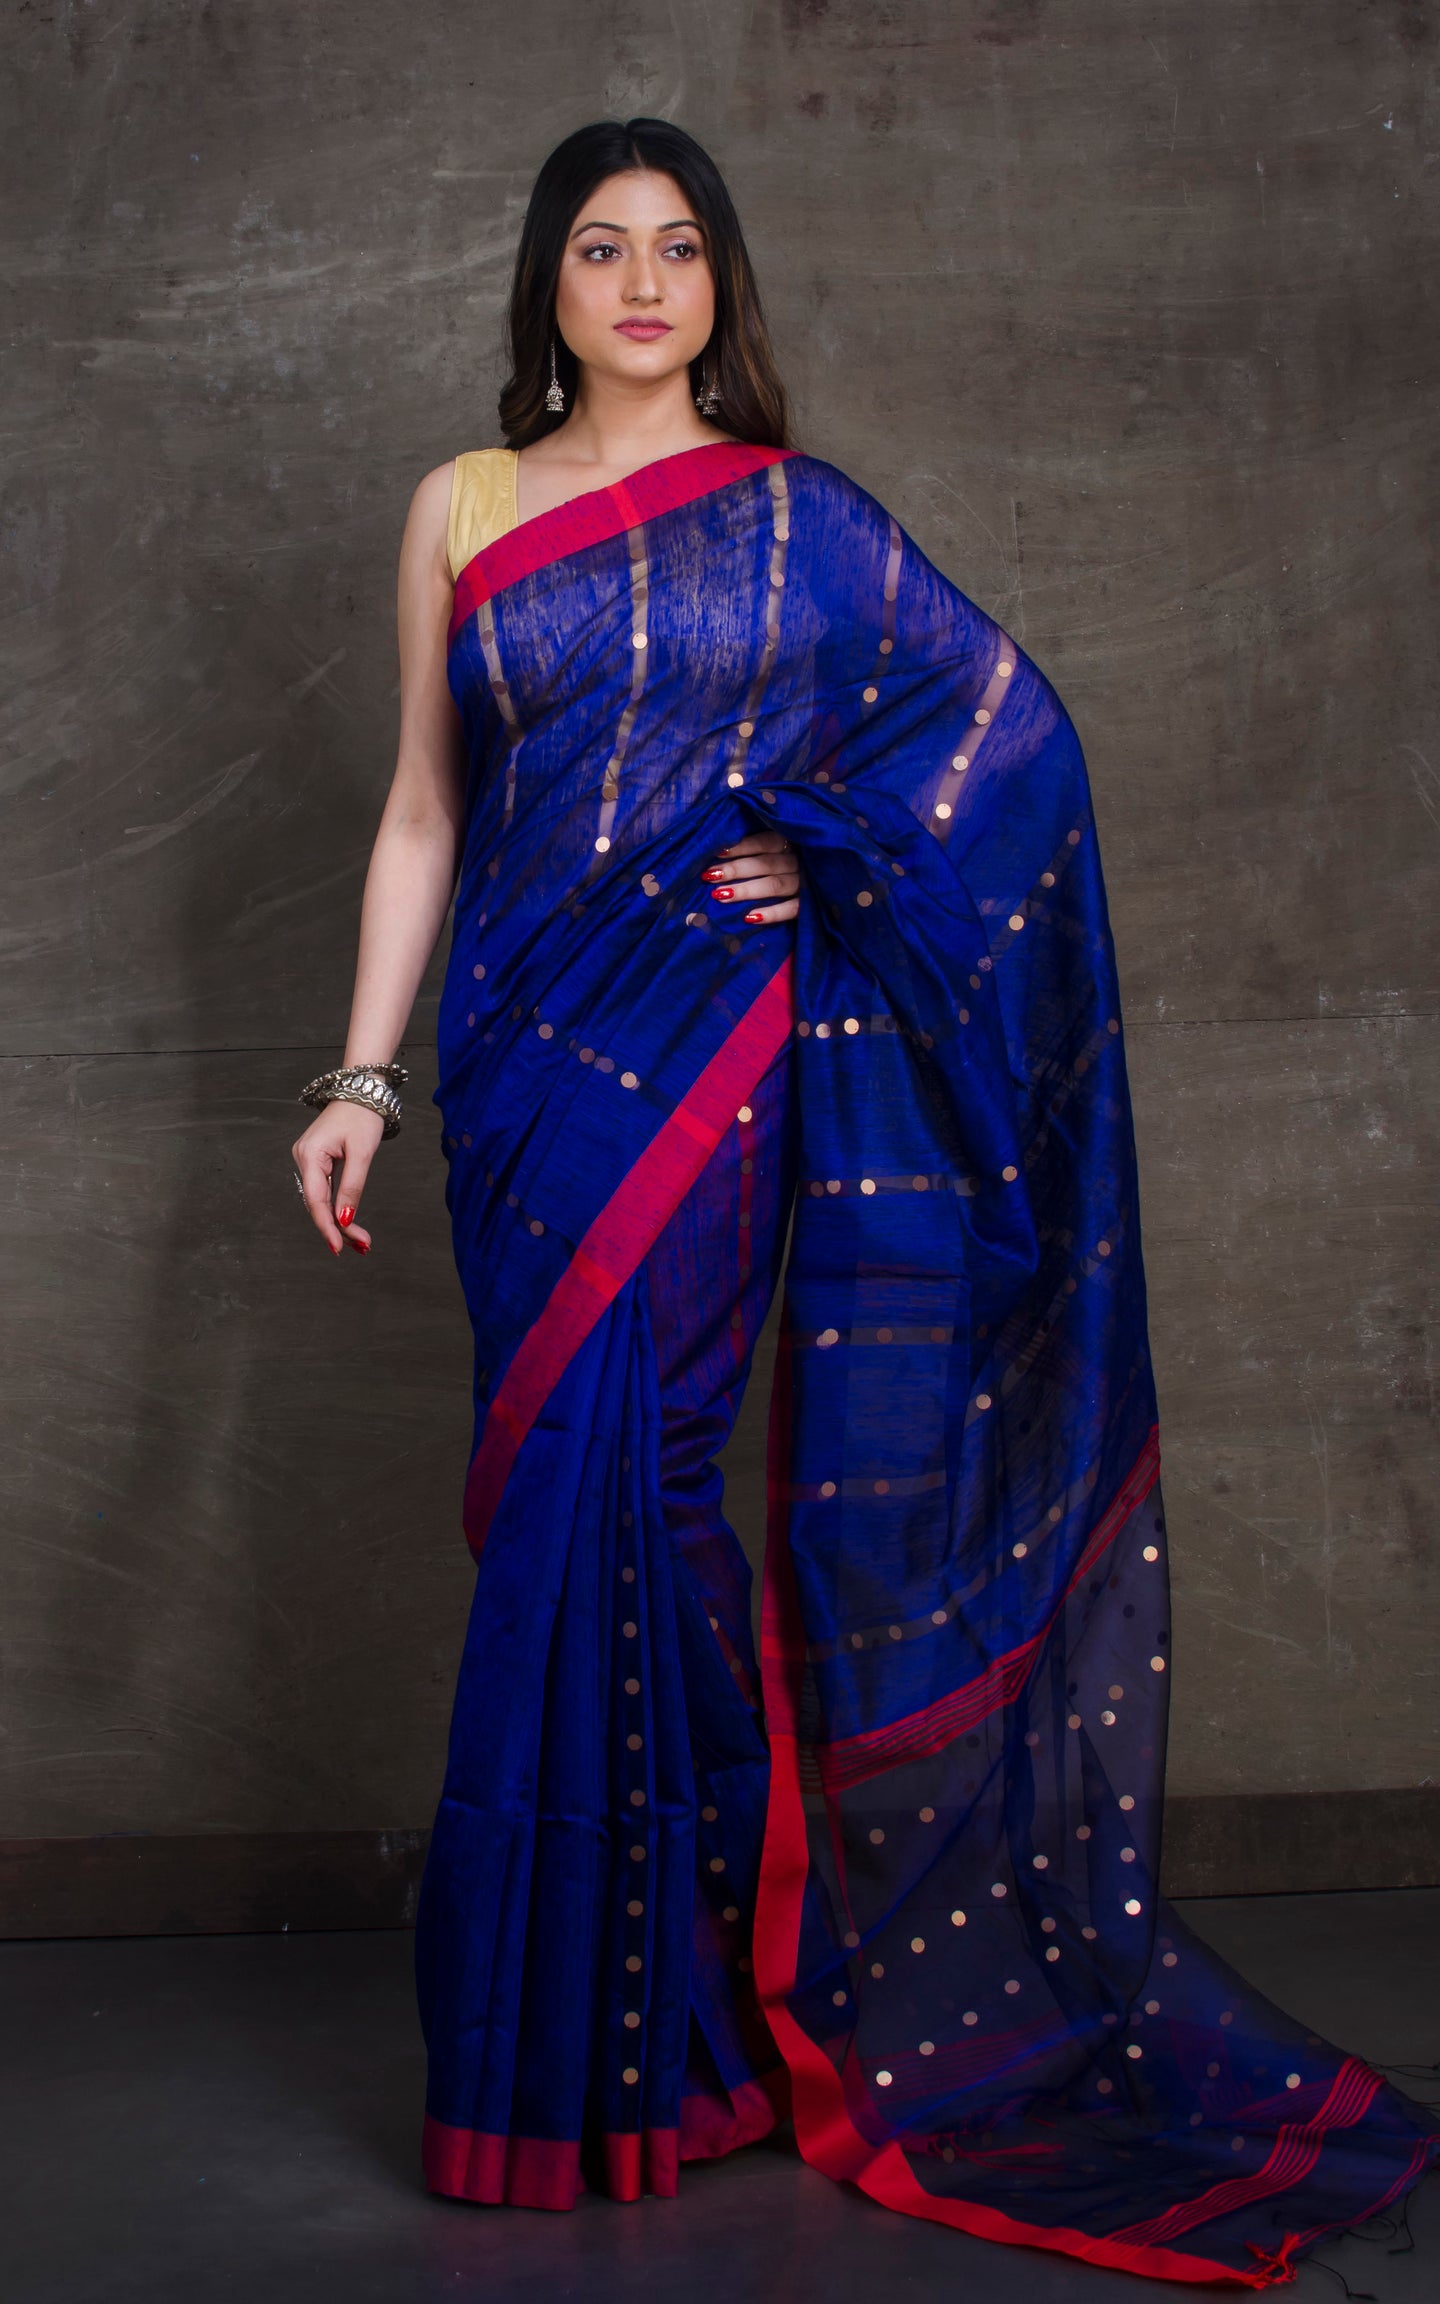 Designer Pure Matka Tussar Silk Saree in Indigo Blue and Red